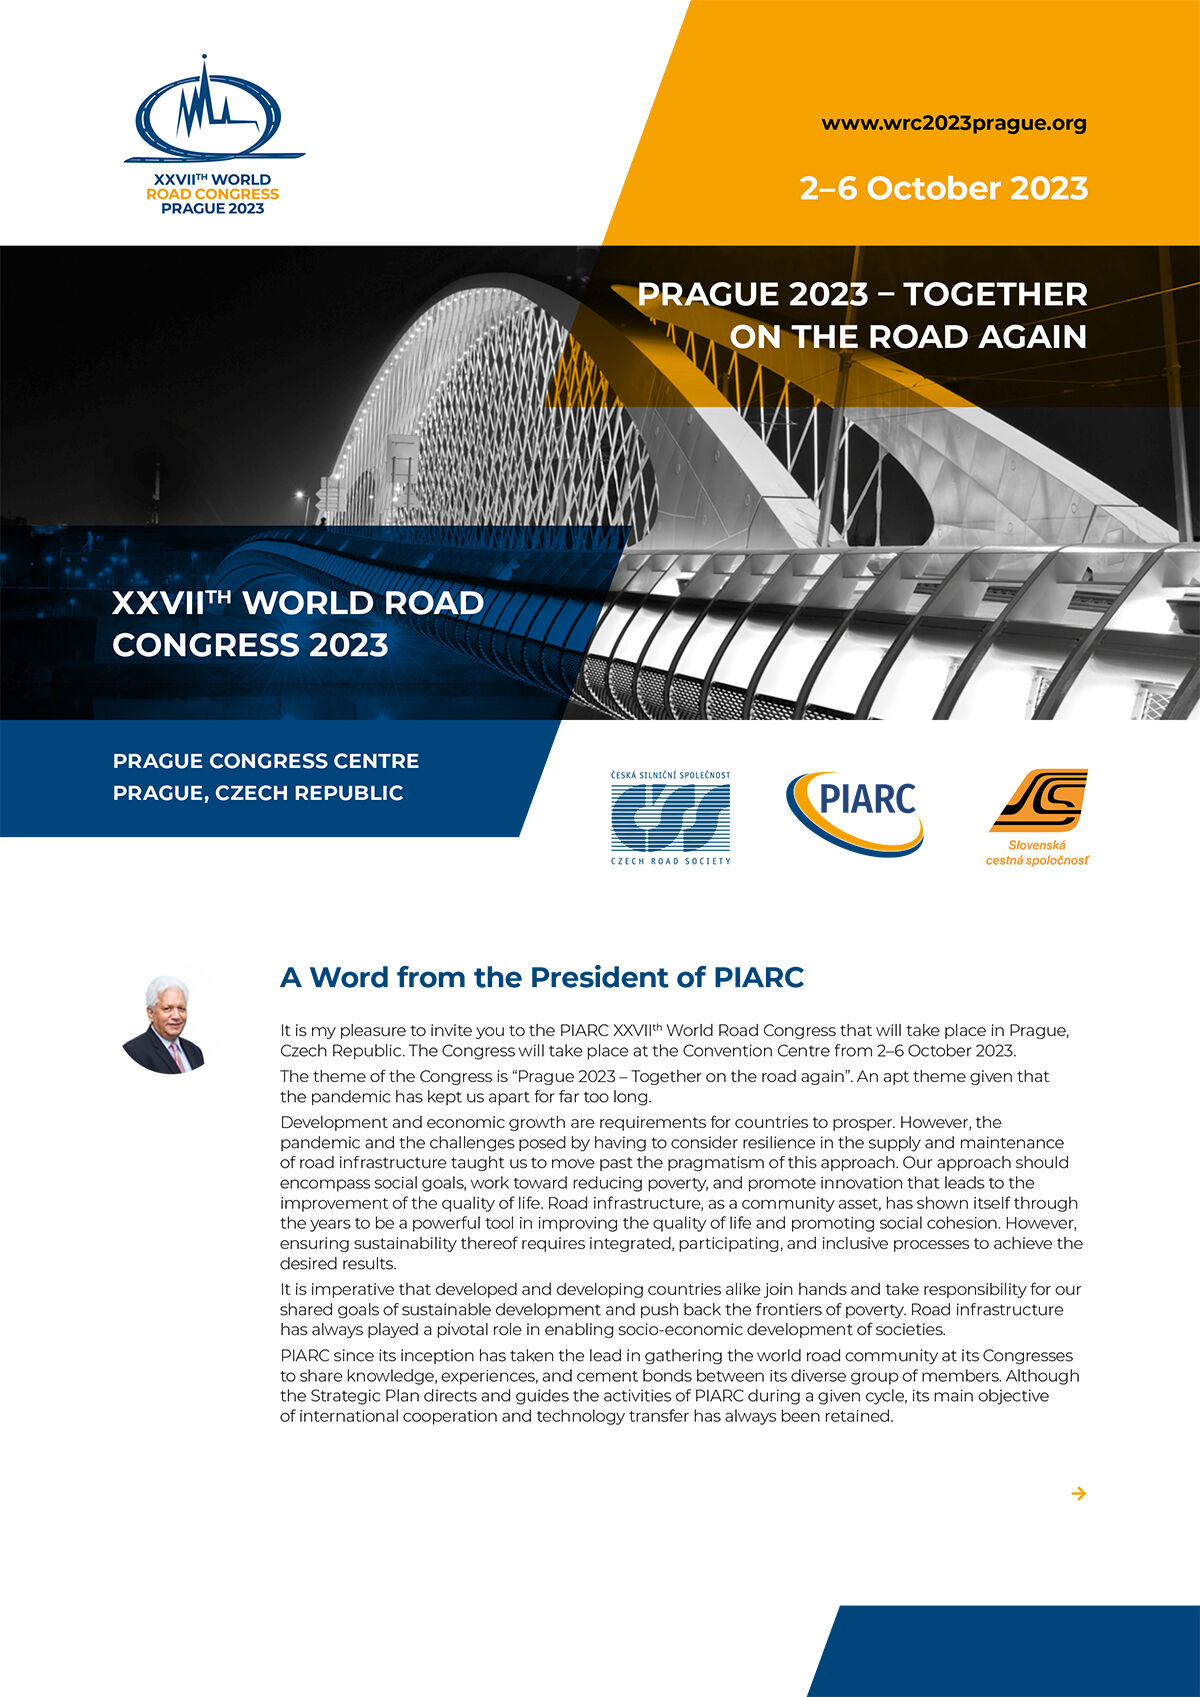 Brochure 1 of the XXVIIth World Road Congress